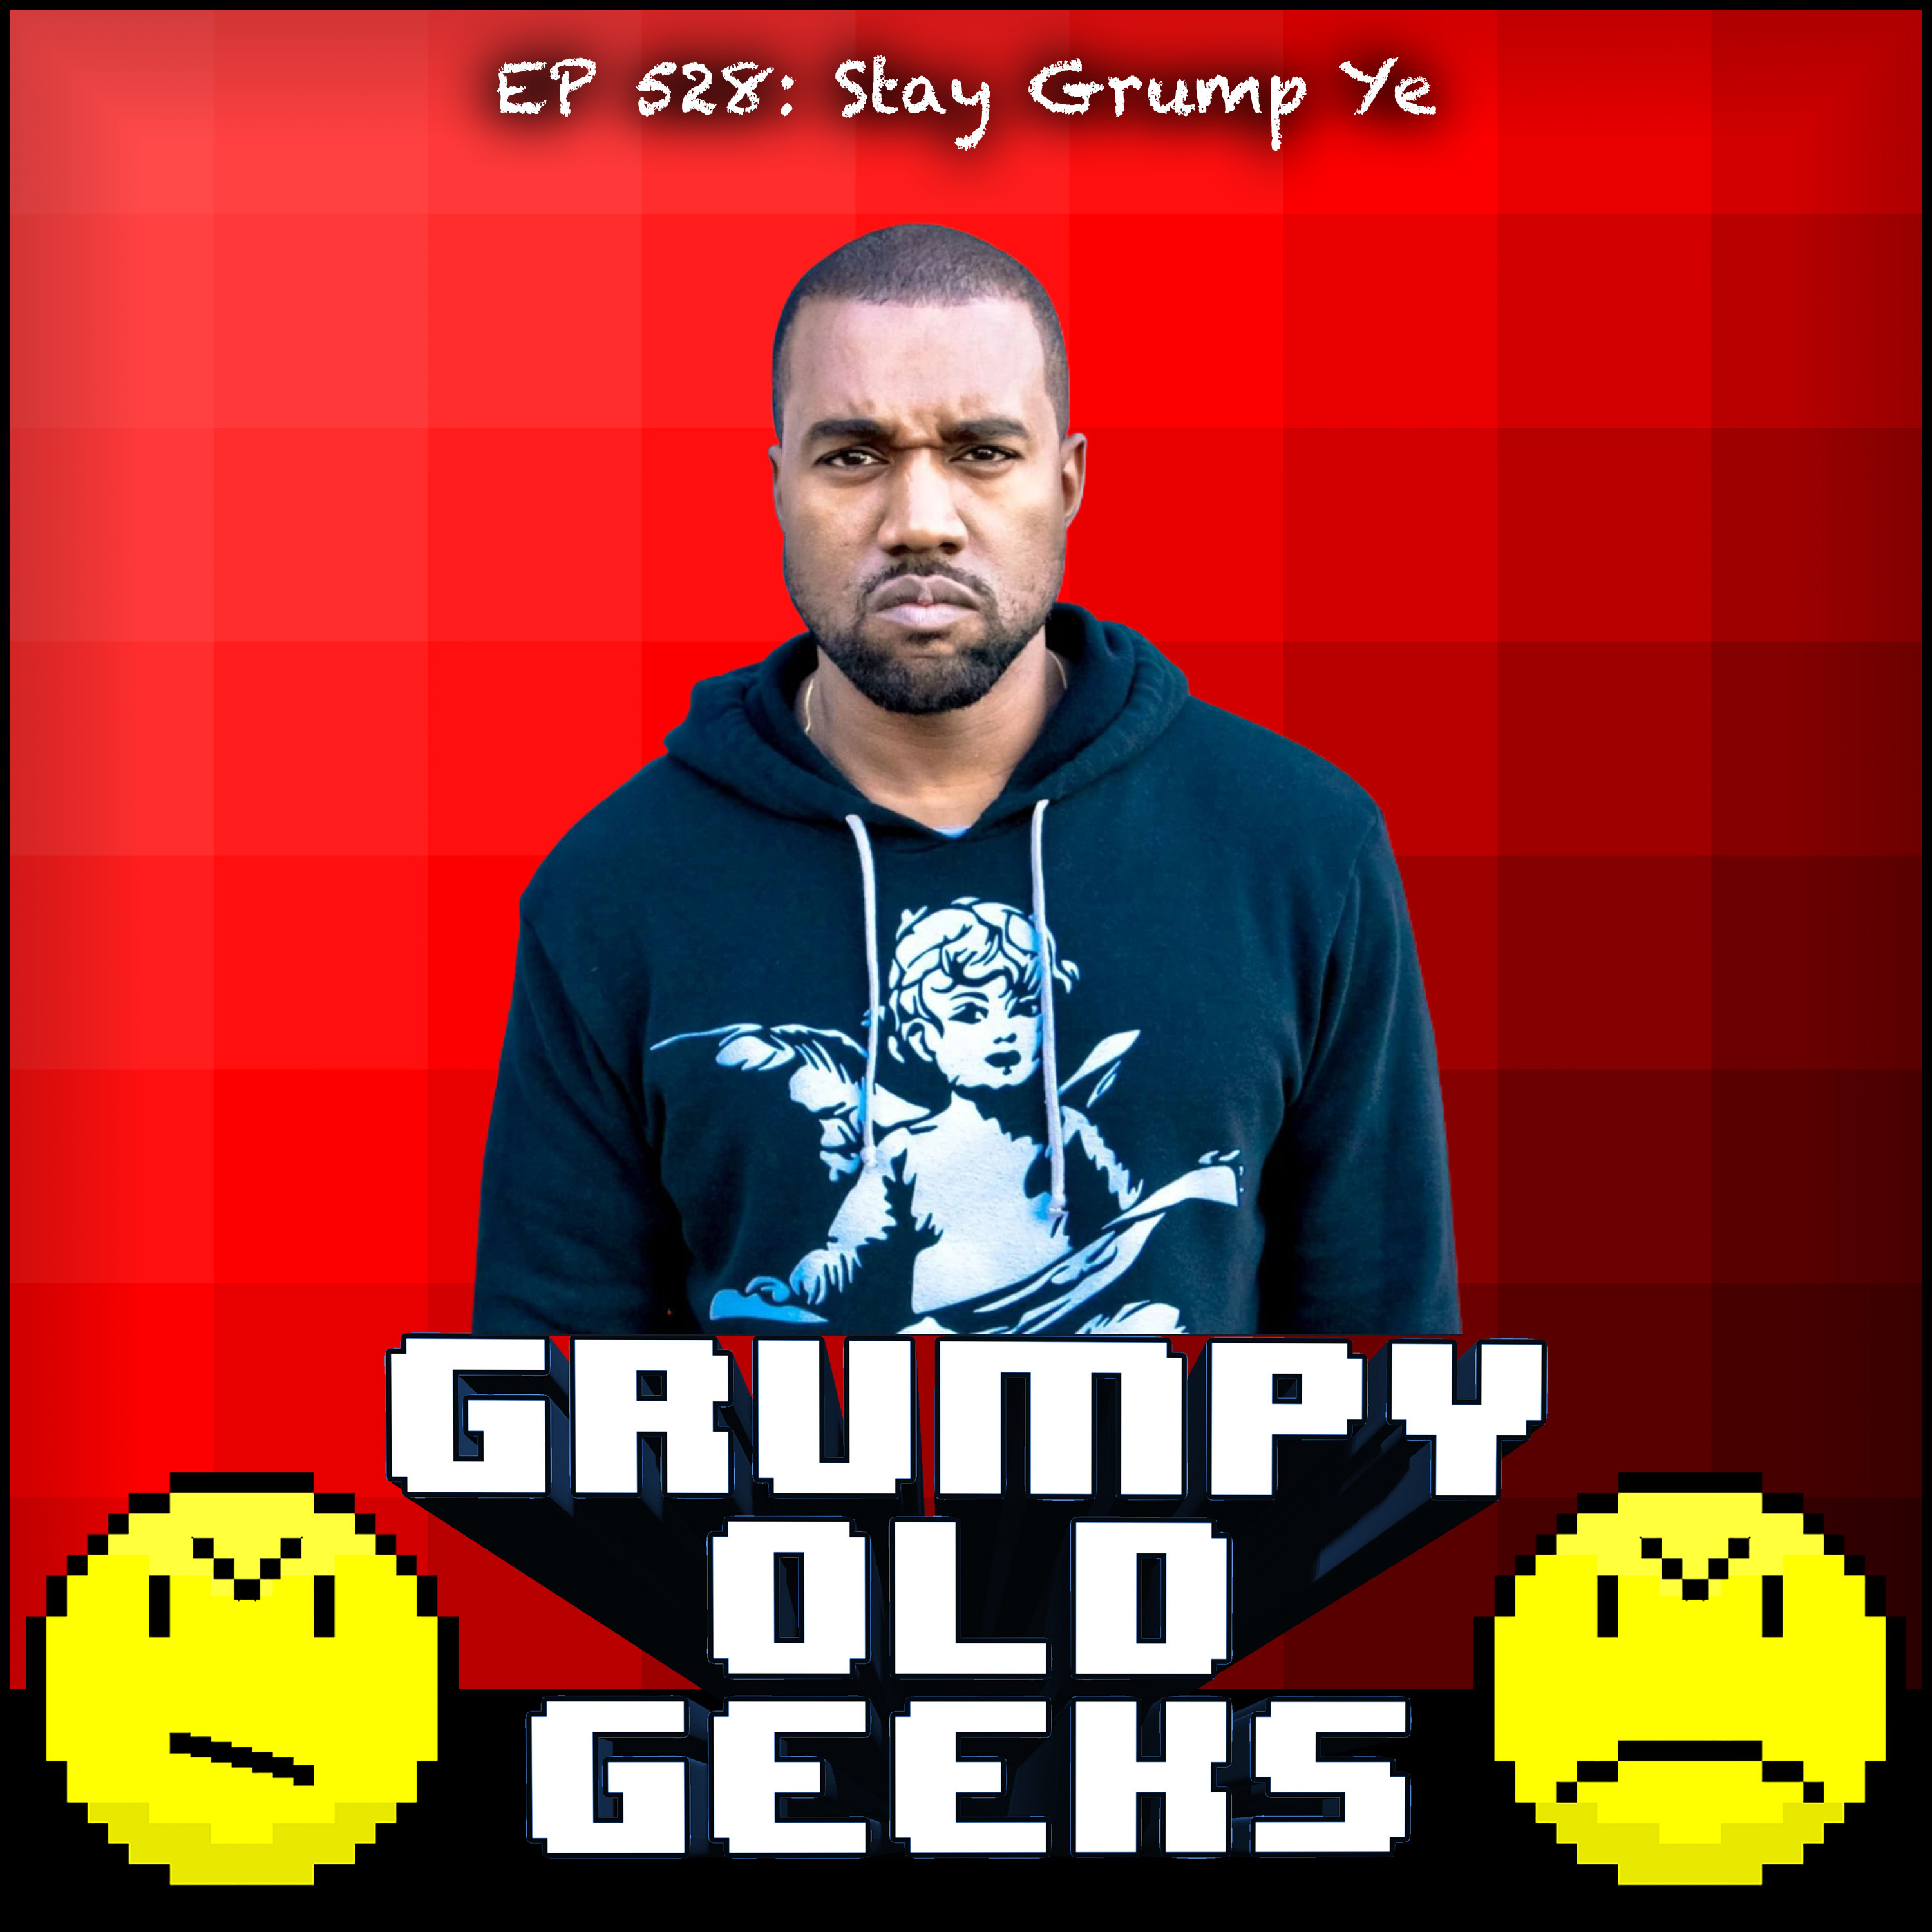 528: Stay Grump Ye